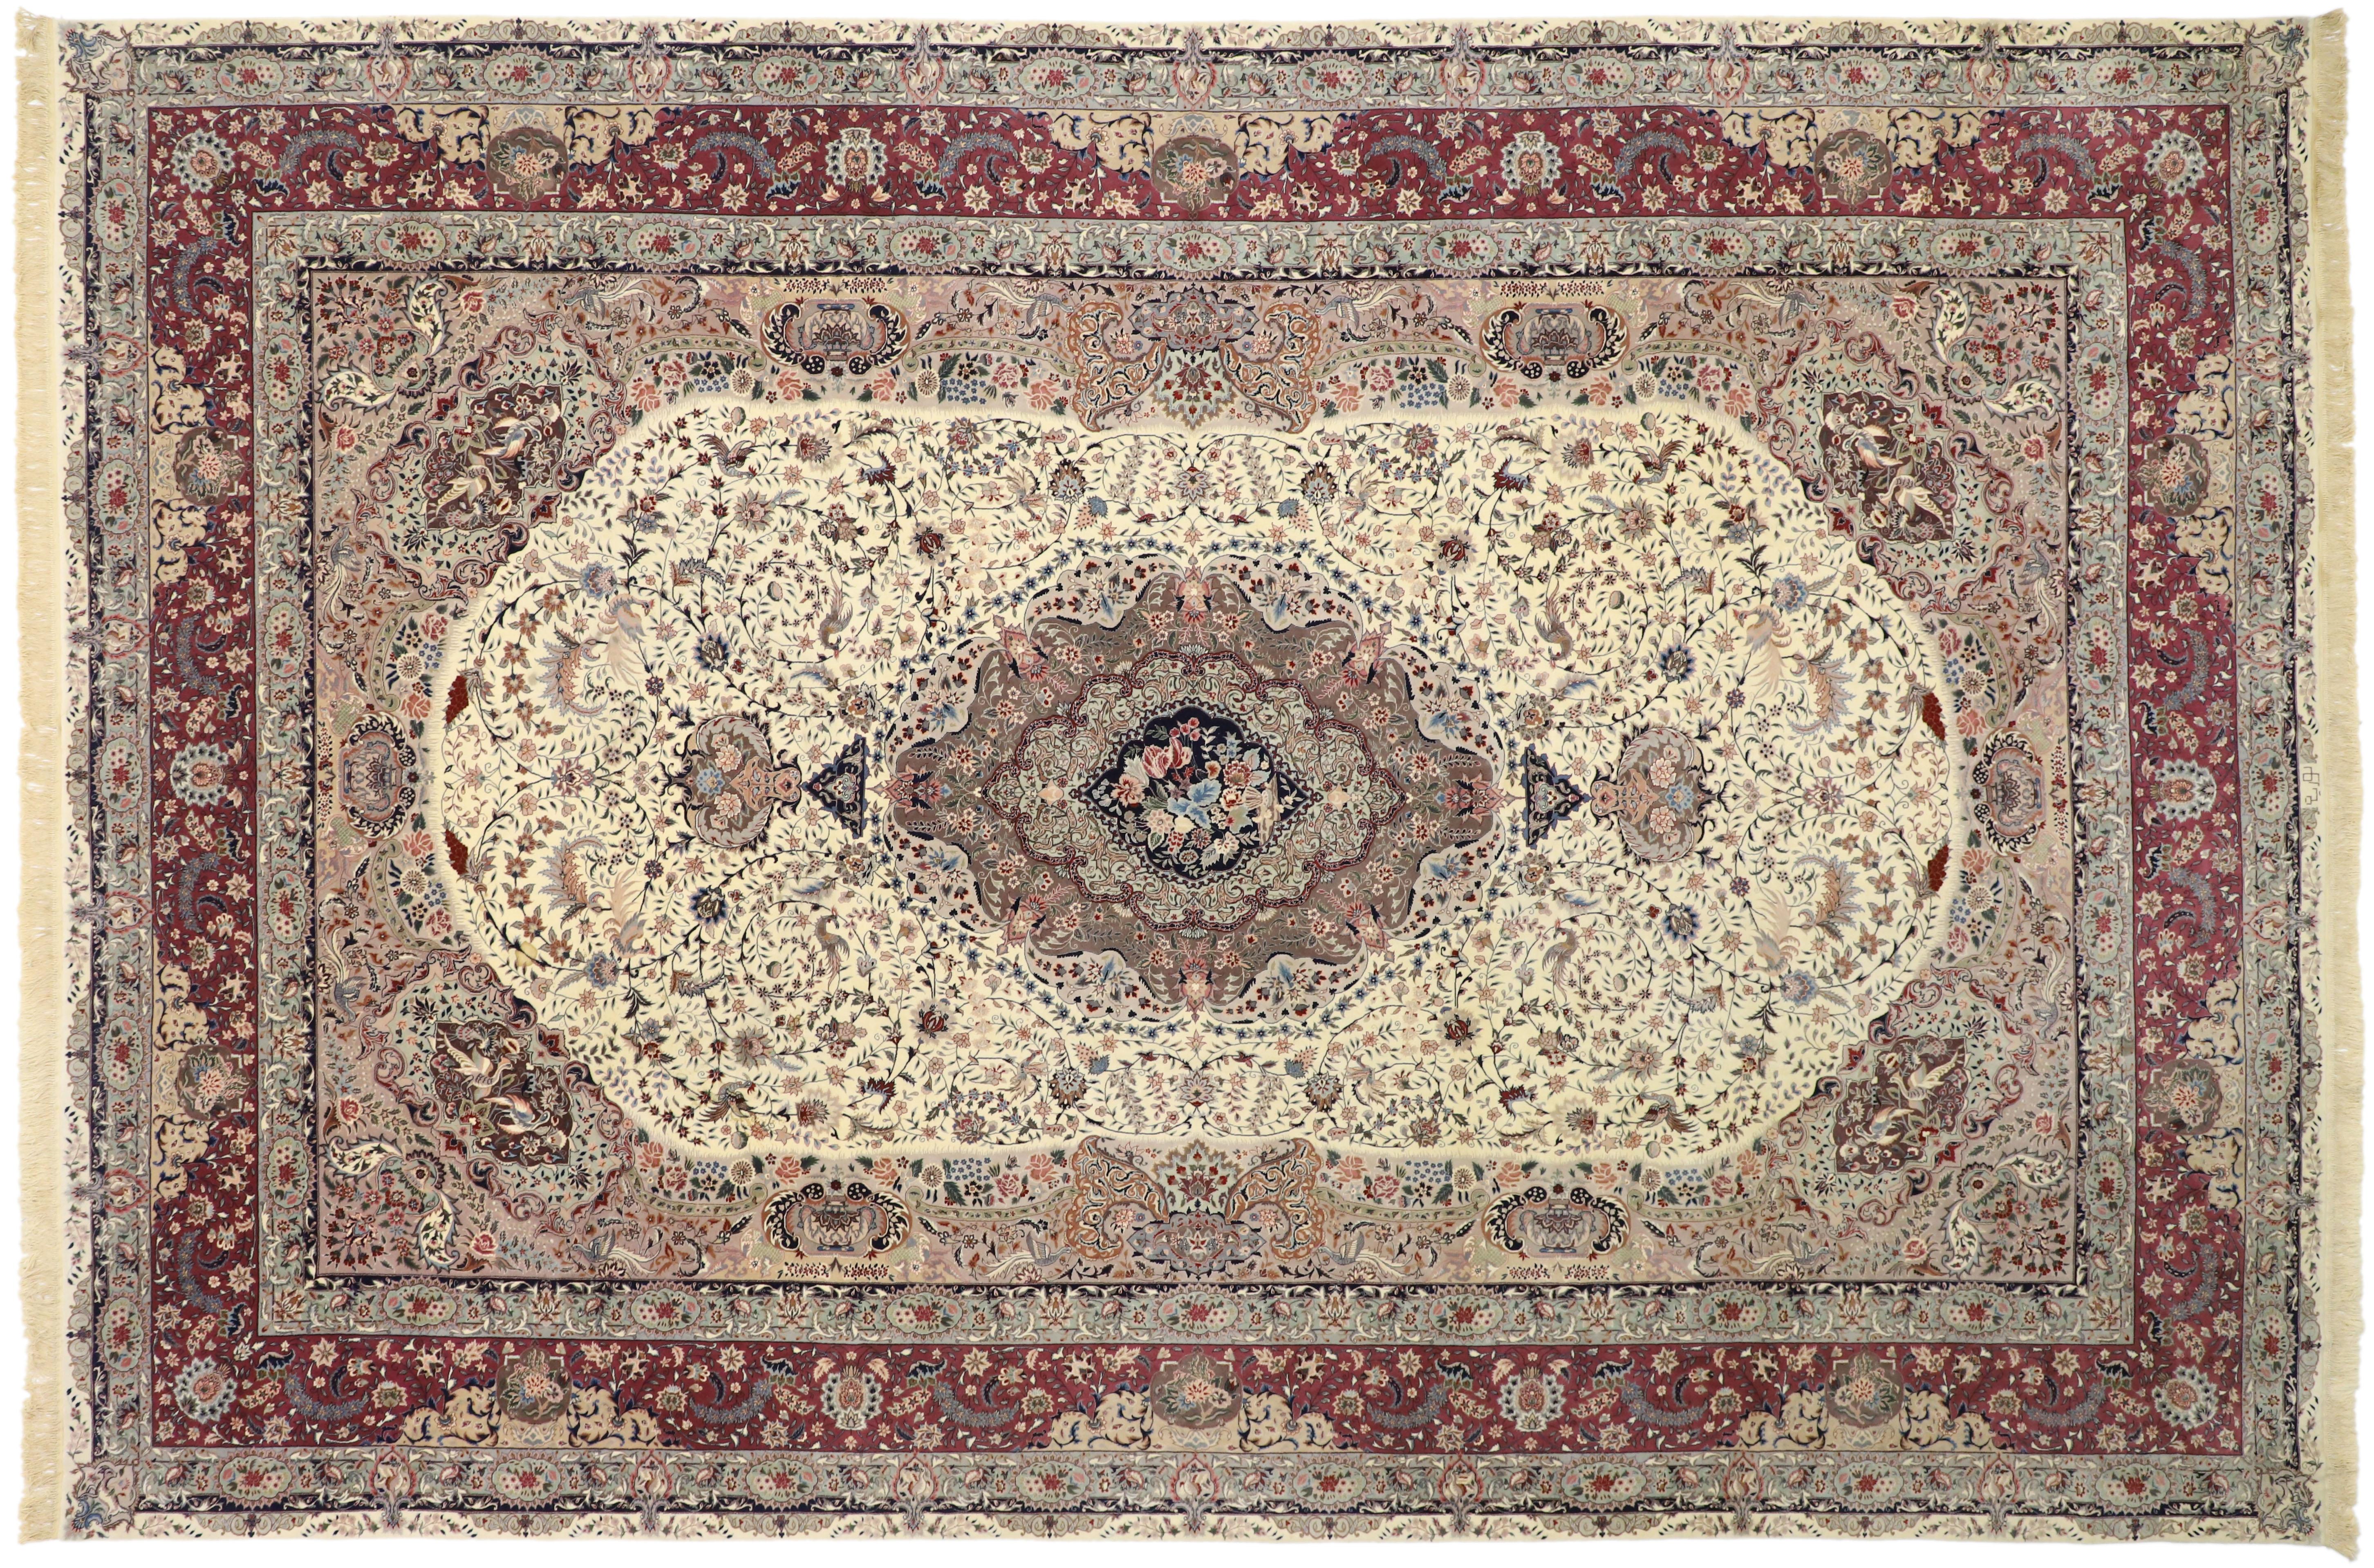 Oversized Antique Persian Tabriz Rug, Bridgerton Style Meets Rococo For Sale 2